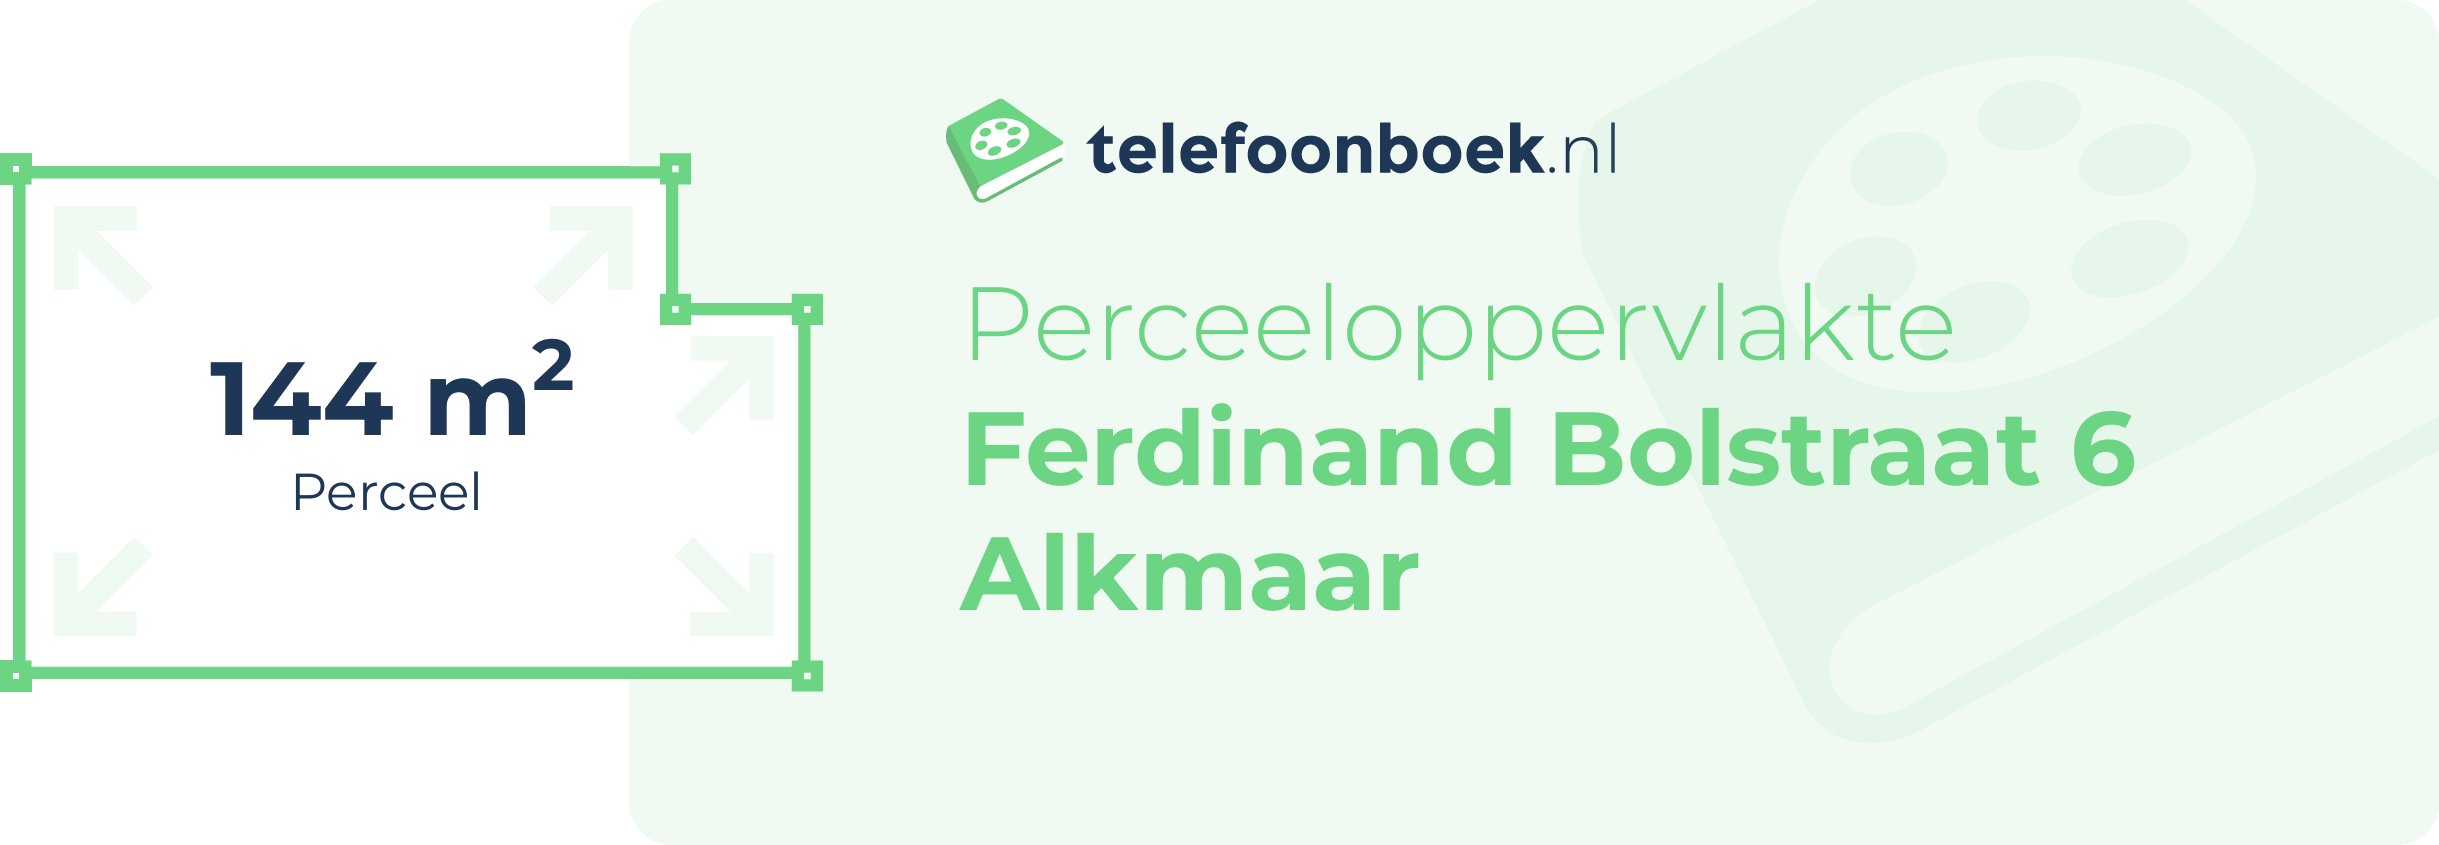 Perceeloppervlakte Ferdinand Bolstraat 6 Alkmaar